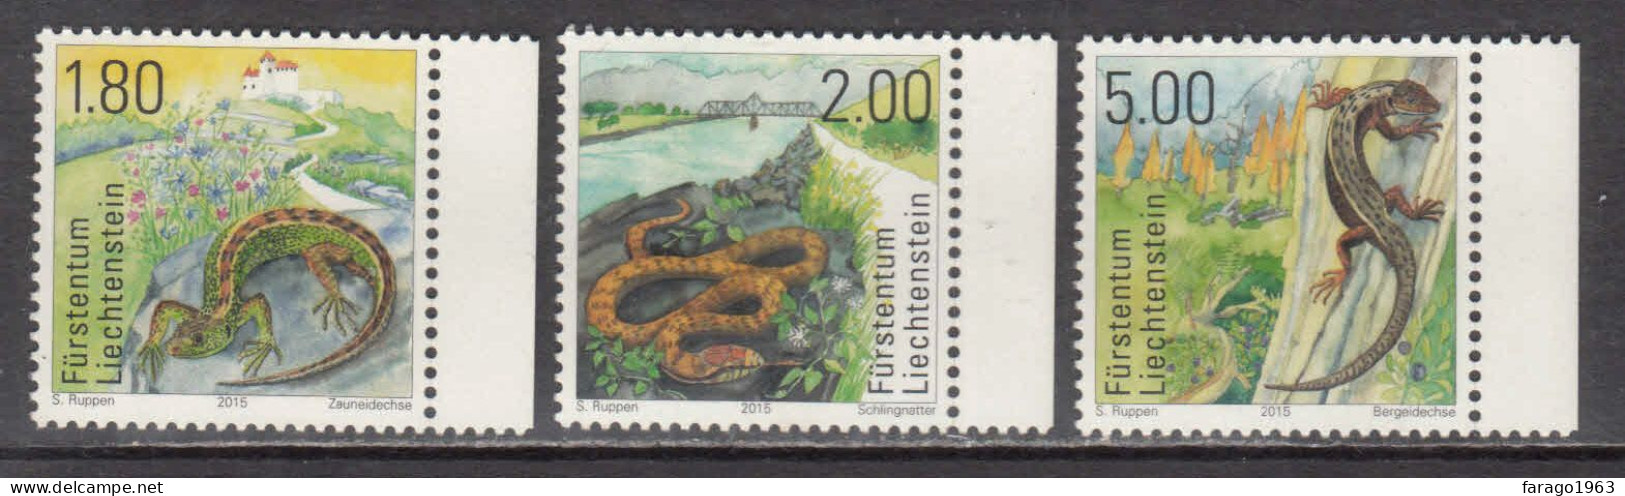 2015 Liechtenstein Reptiles Snakes Complete Set Of 3 MNH @ BELOW FACE VALUE - Unused Stamps